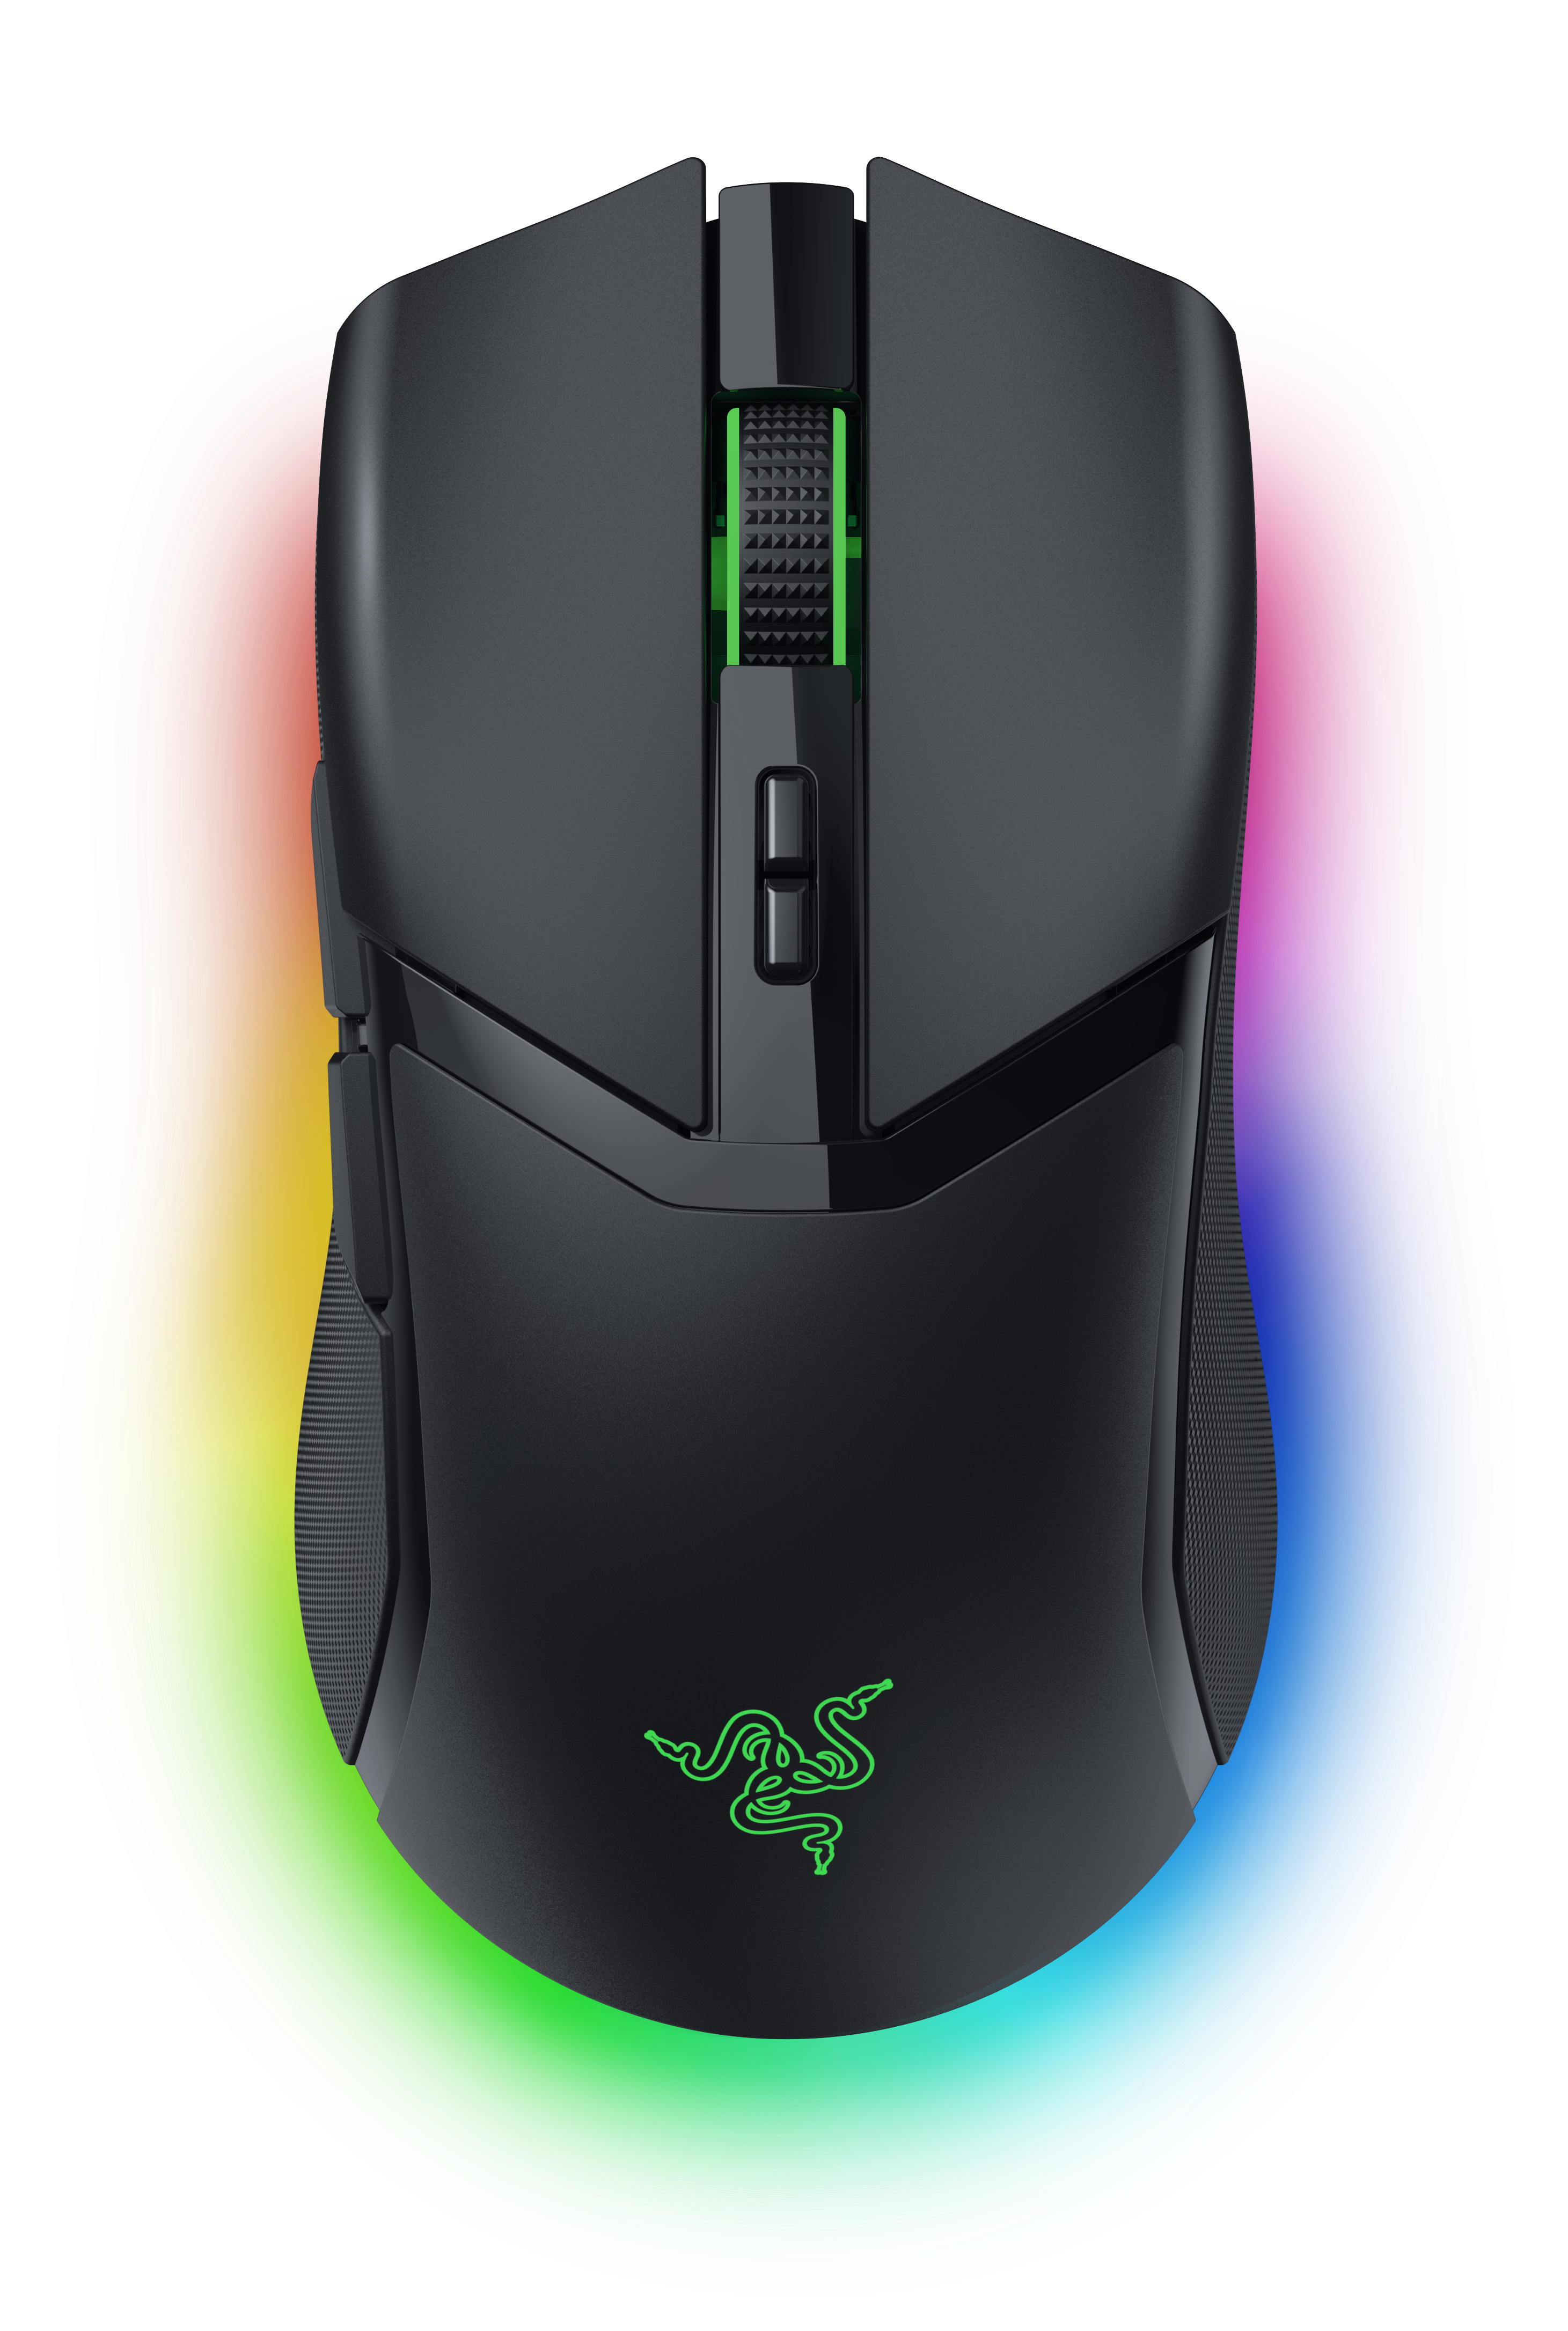 Razer Cobra Pro Lightweight Wireless Gaming Mouse with Razer Chroma RGB - Black